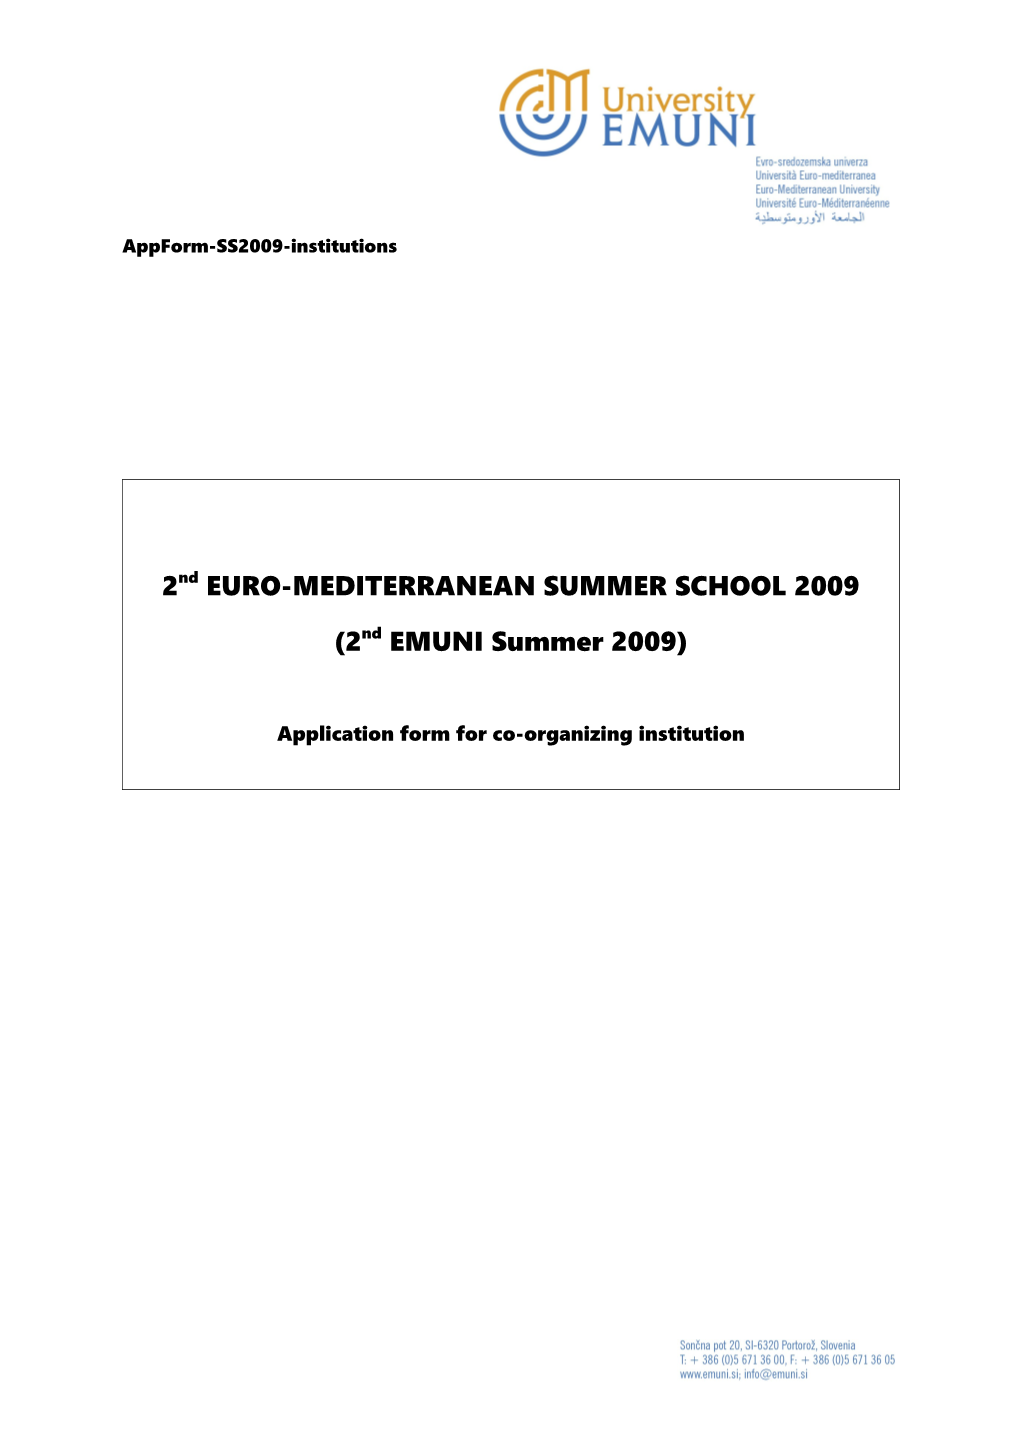 EMUNI University Appform-SS2009-Institutions